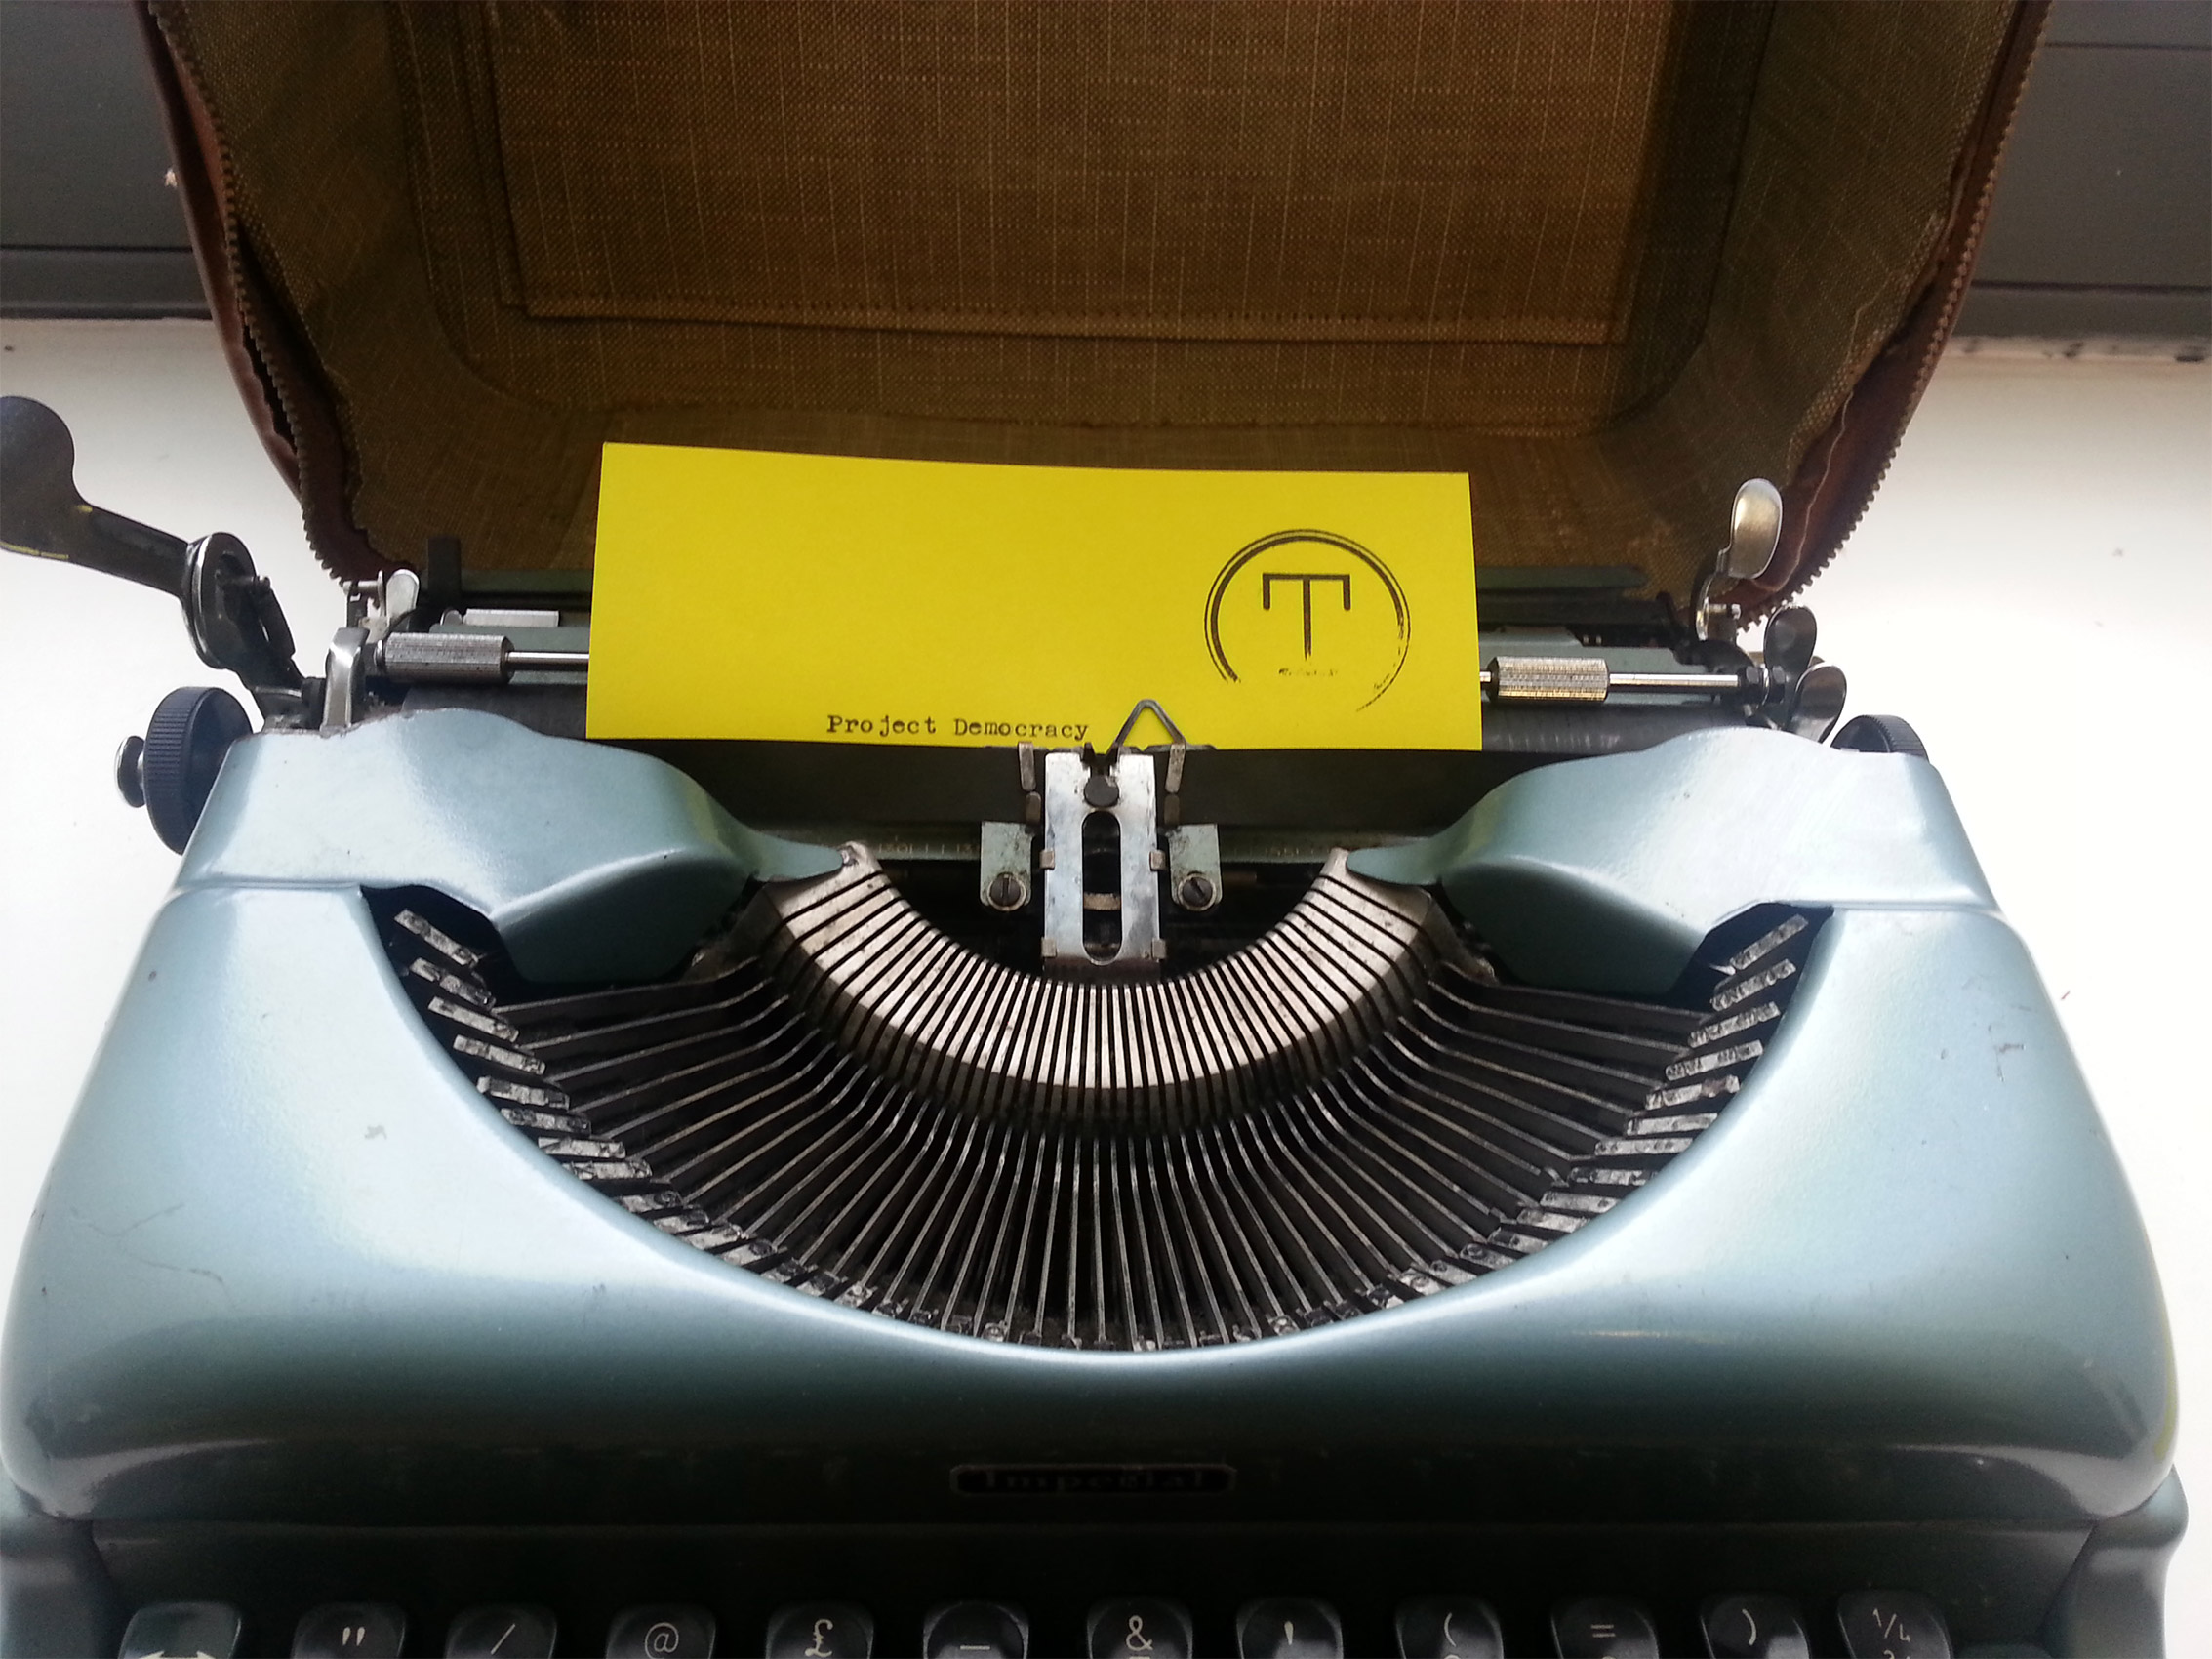 Project Typewriter